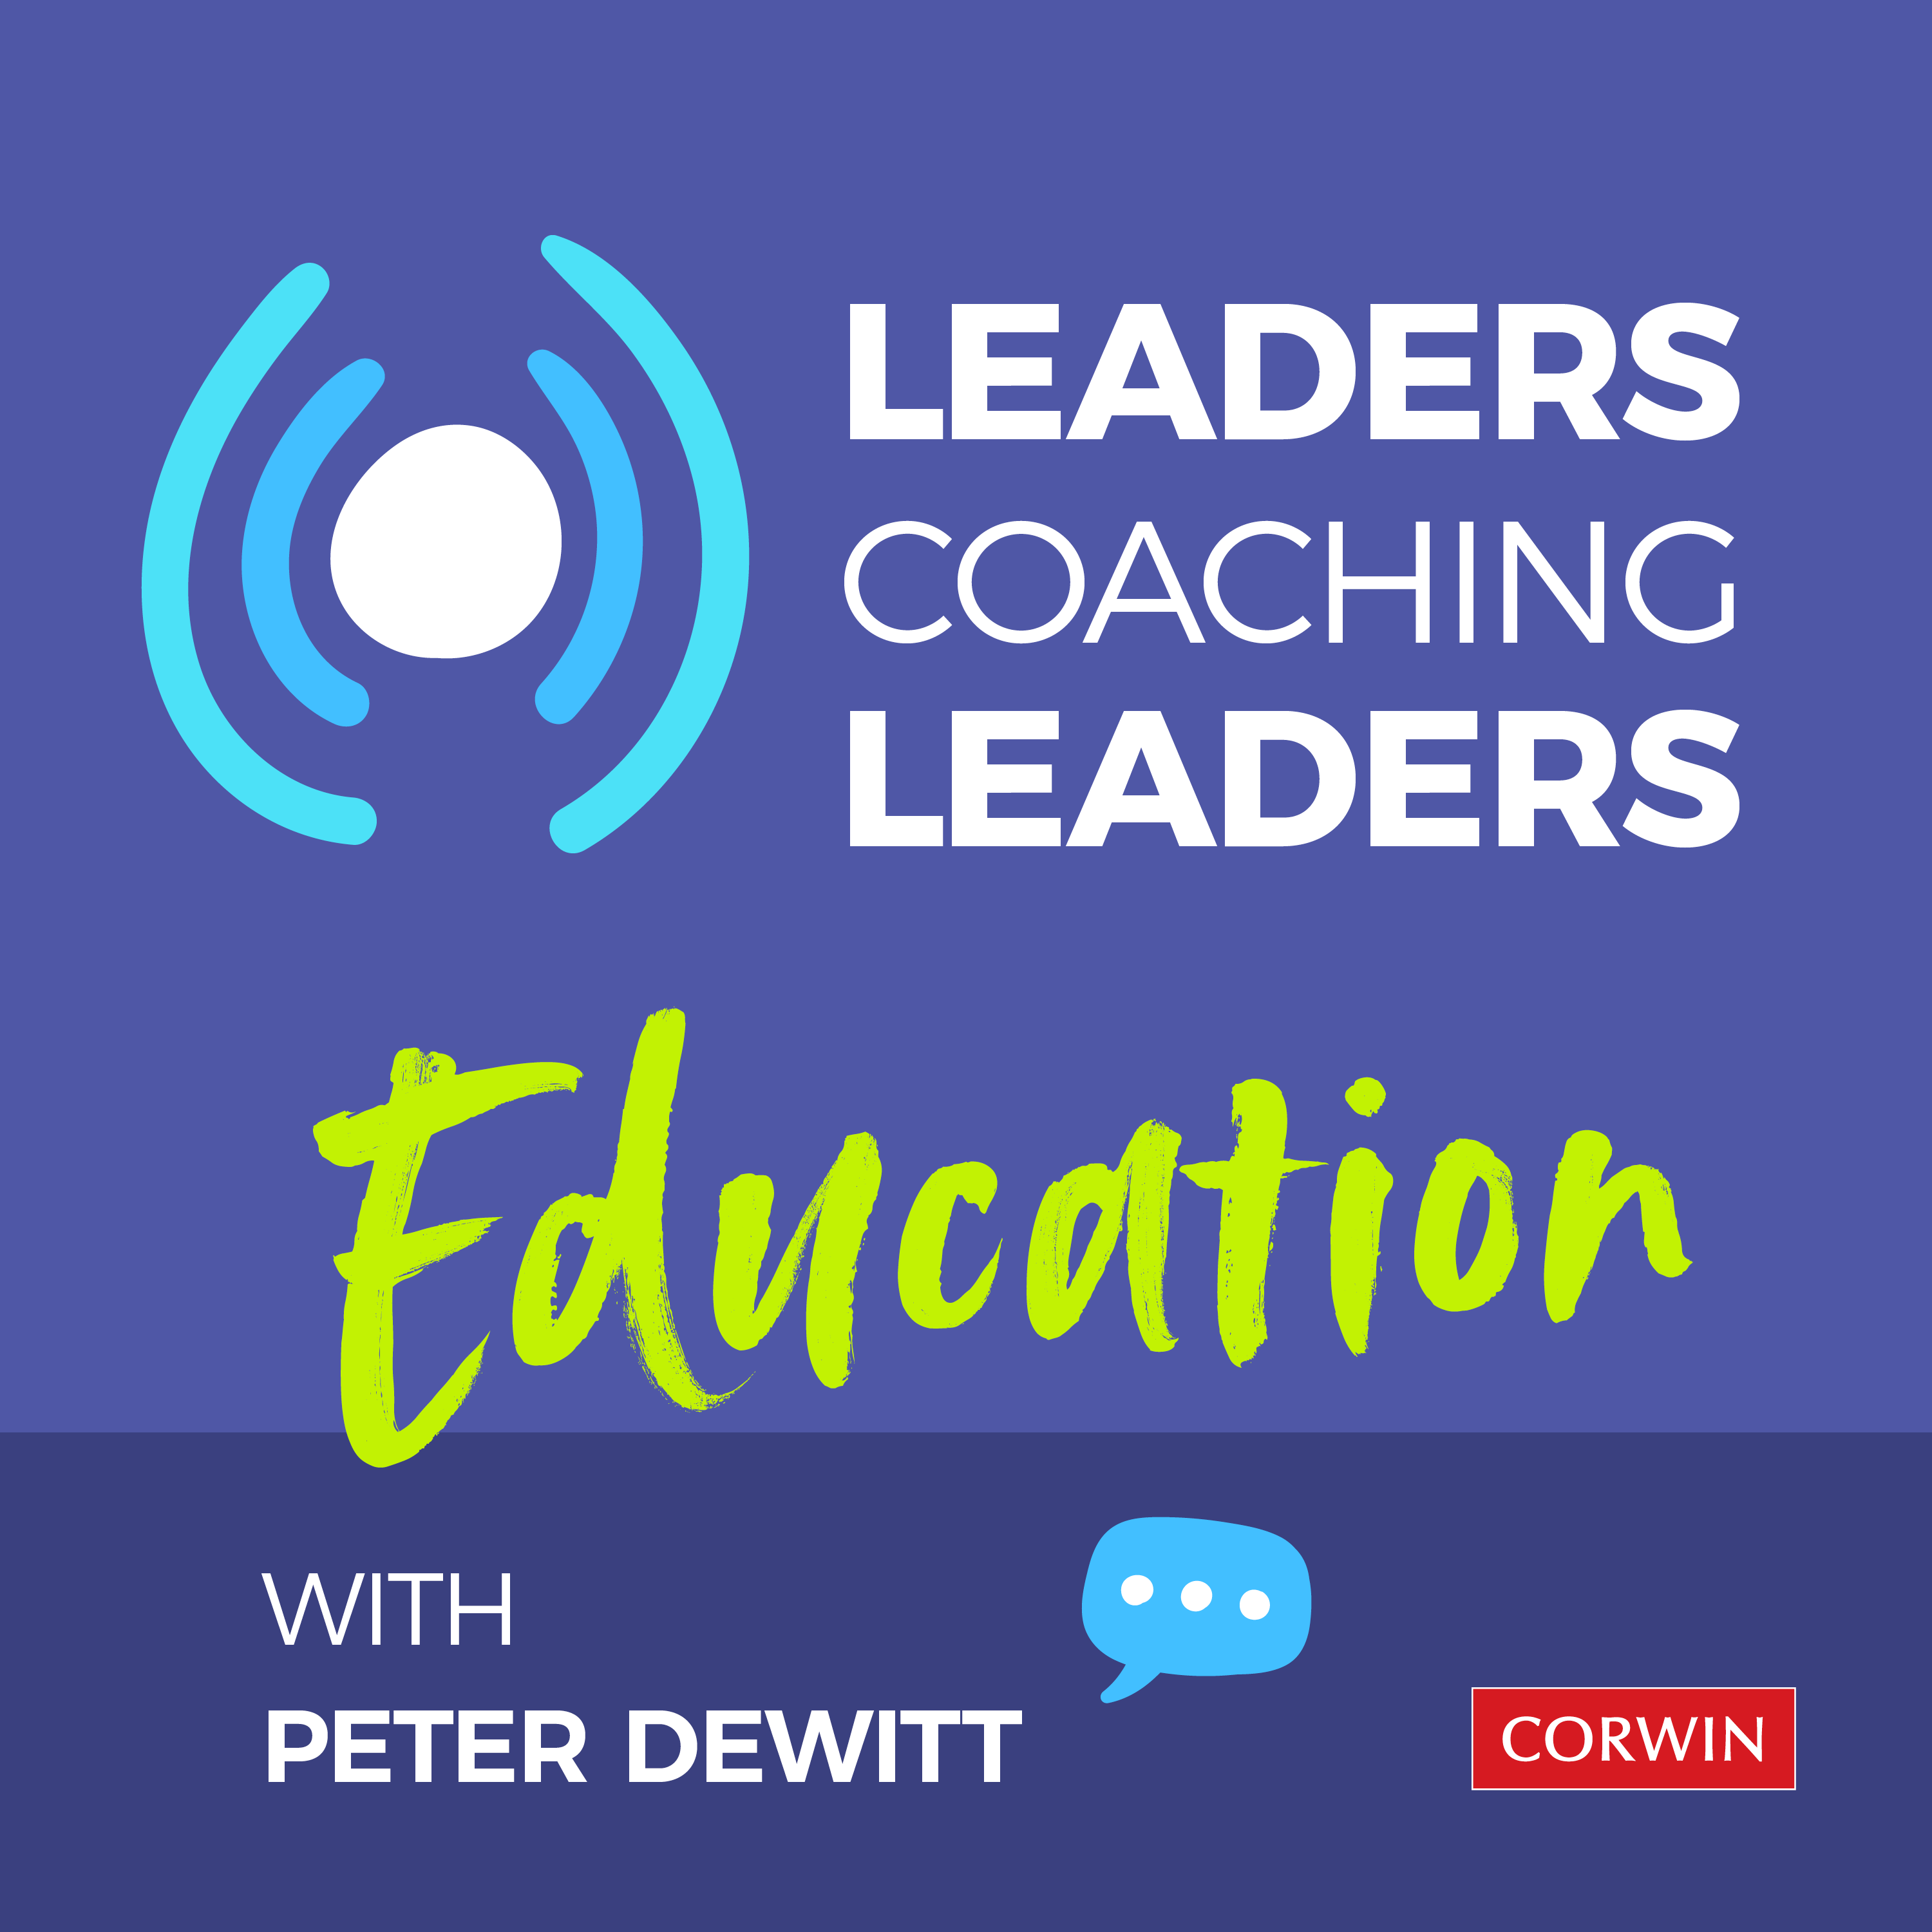 Leading Coaching Leaders Education